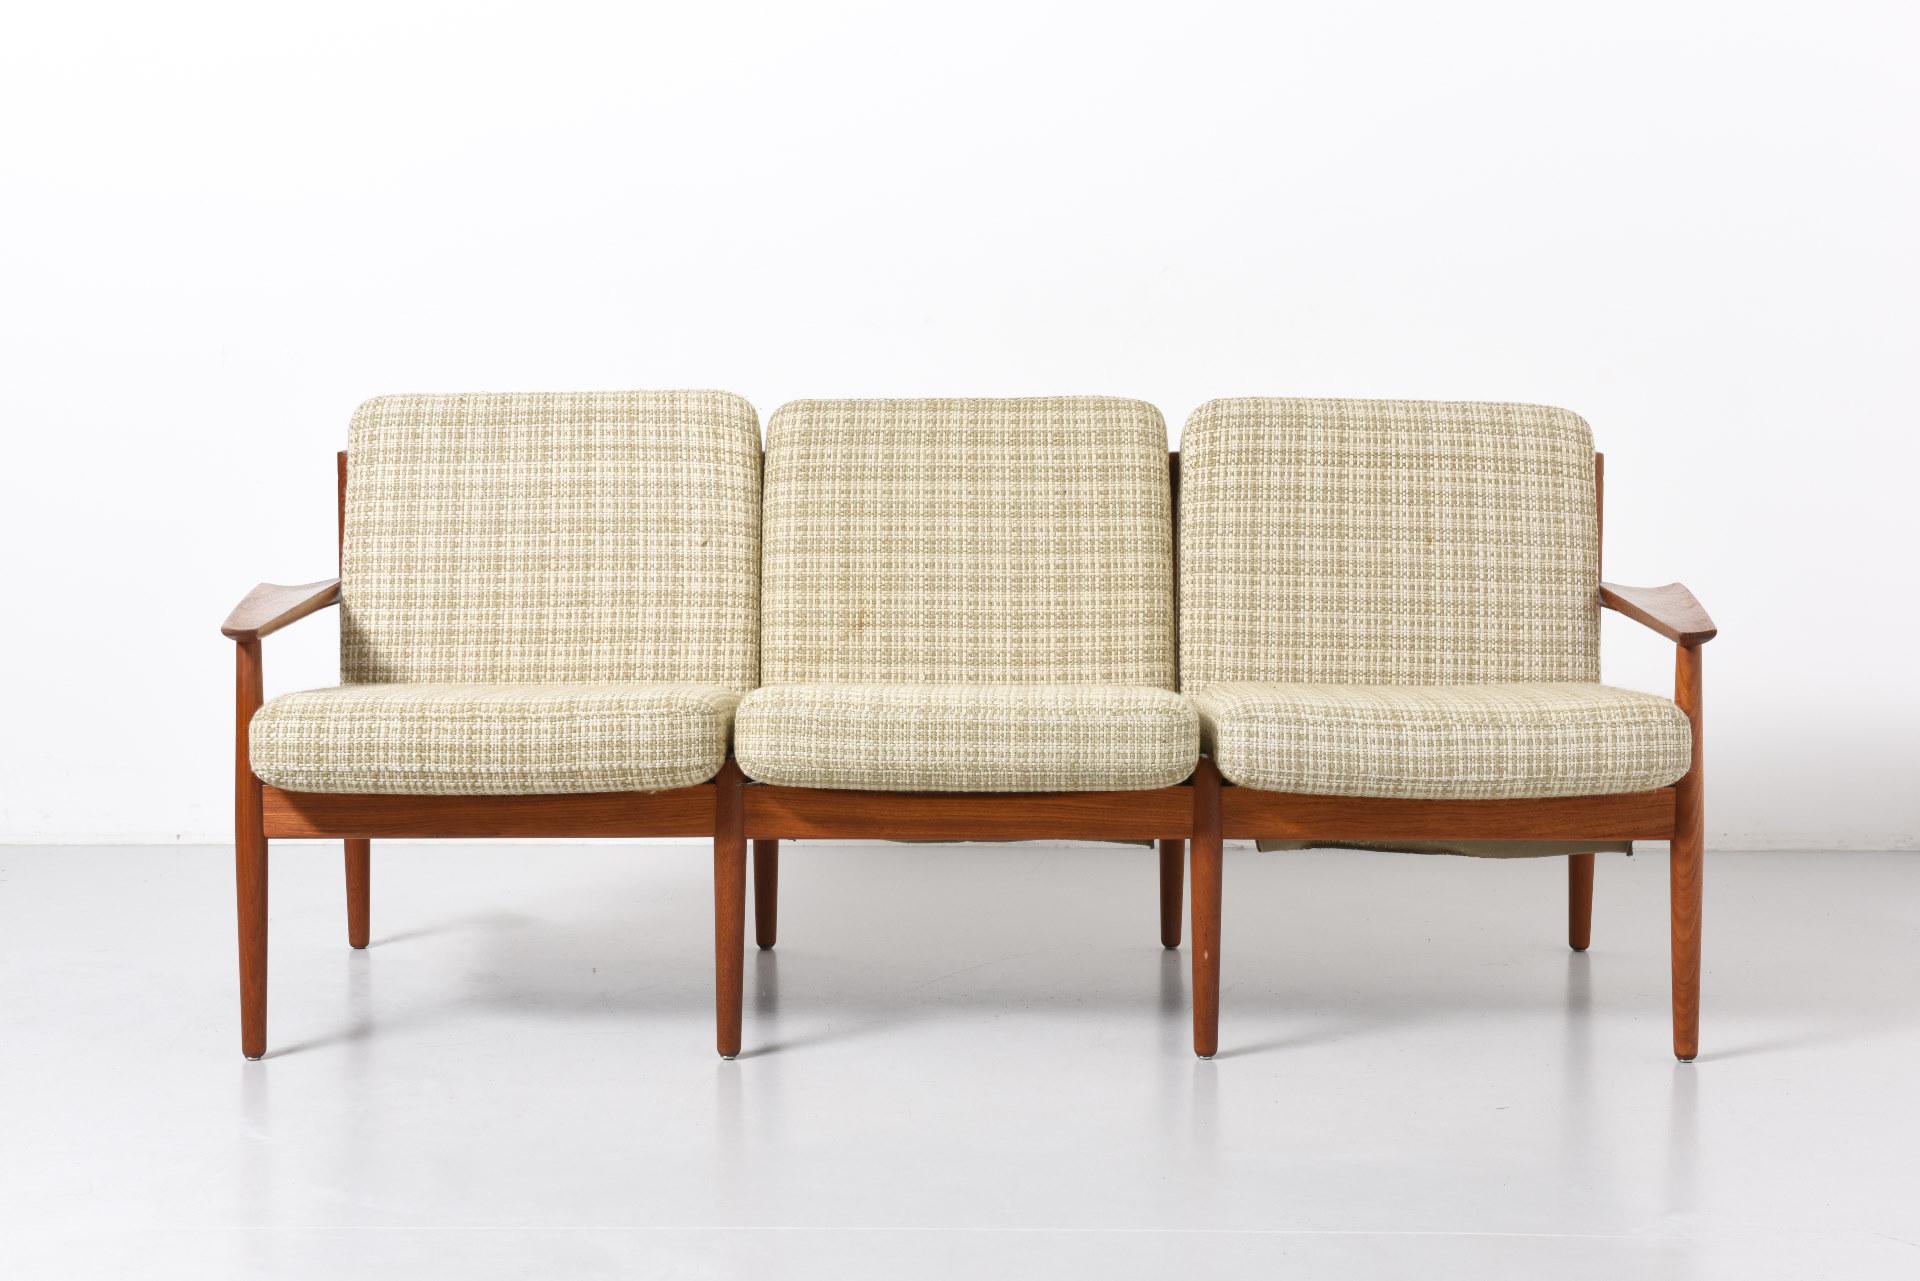 3-seat sofa in teak with original cushions. Design by Arne Vodder in the 1960s. Made in Denmark by Glostrup Møbelfabrik.
 